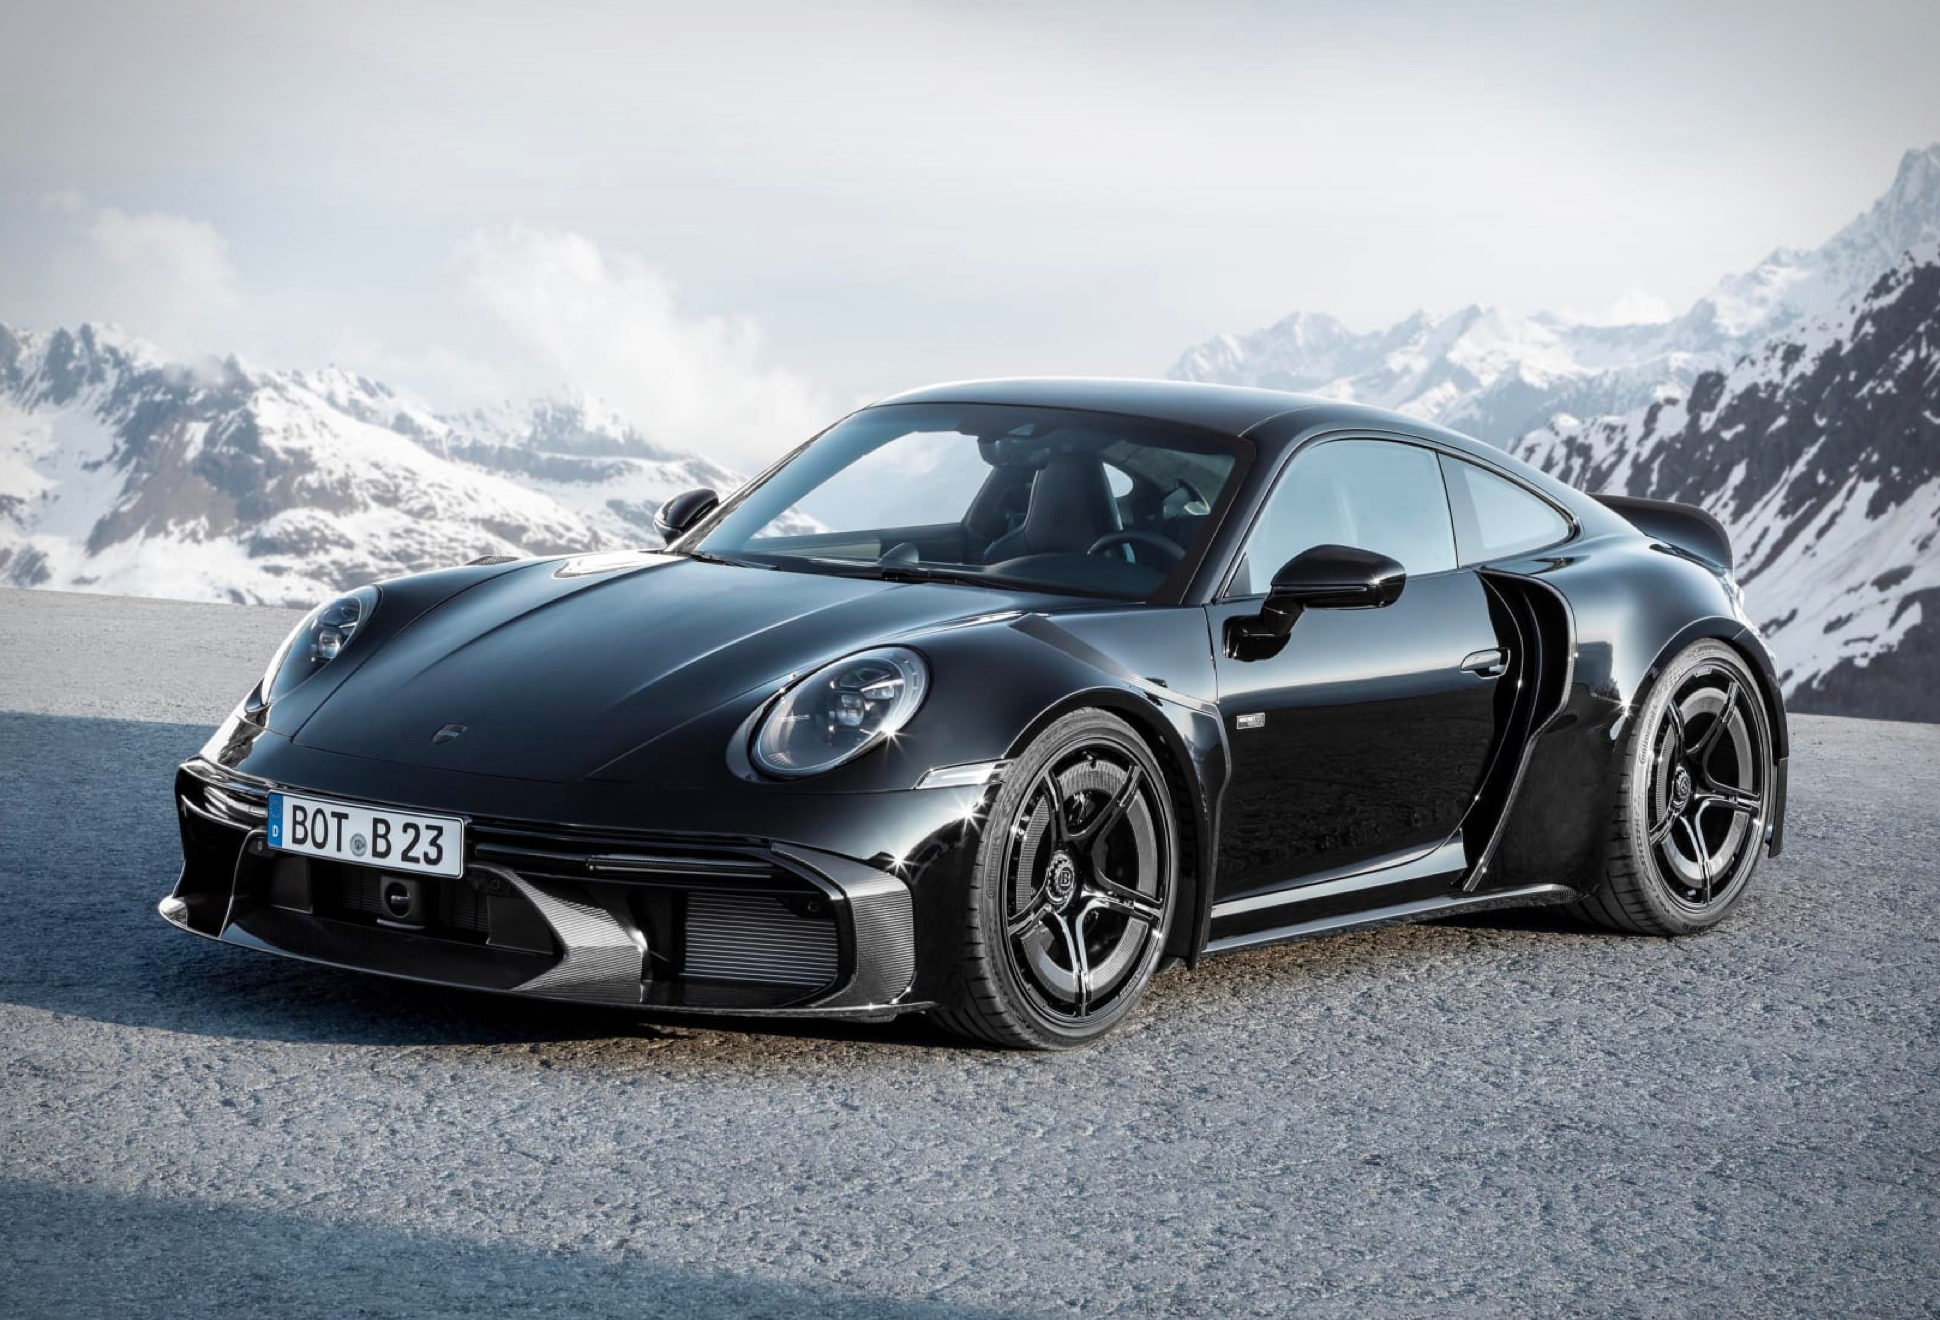 Porsche 911 Brabus 900 Rocket R: O Carro De Supercarros Mais Poderoso Do Mundo - Image